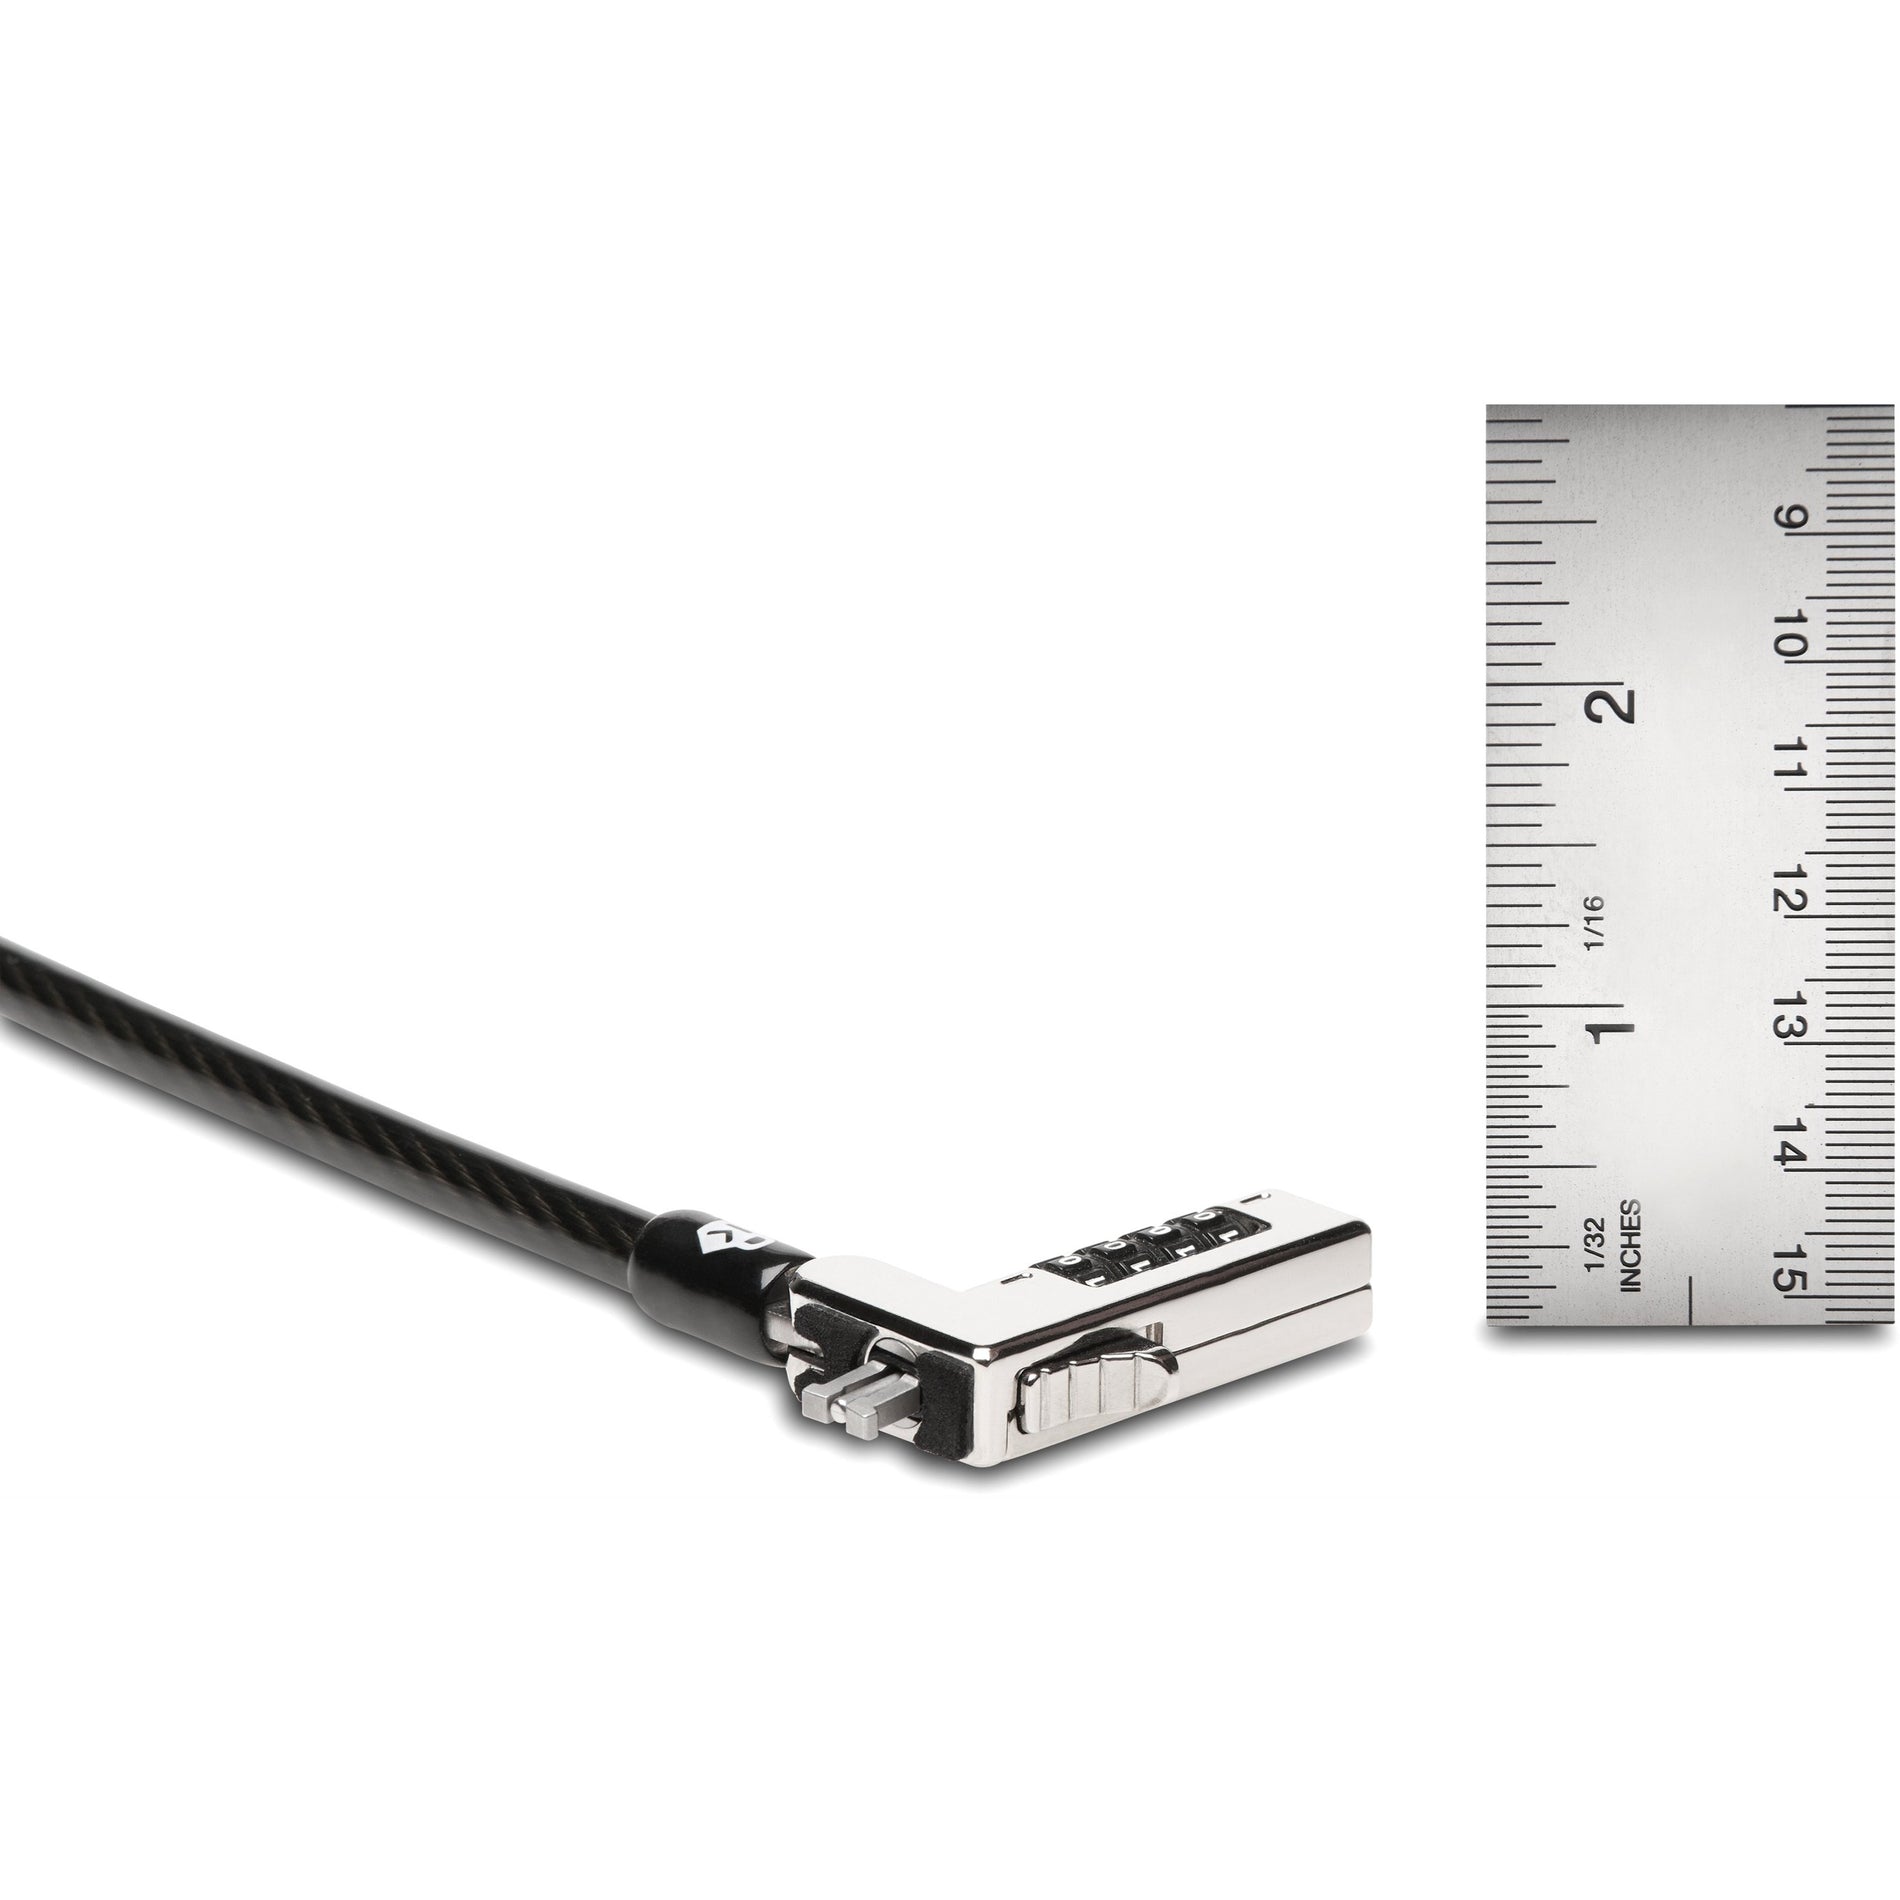 Kensington K60629WW Slim NanoSaver Combination Ultra Cable Lock, 6 ft, 4-digit Resettable